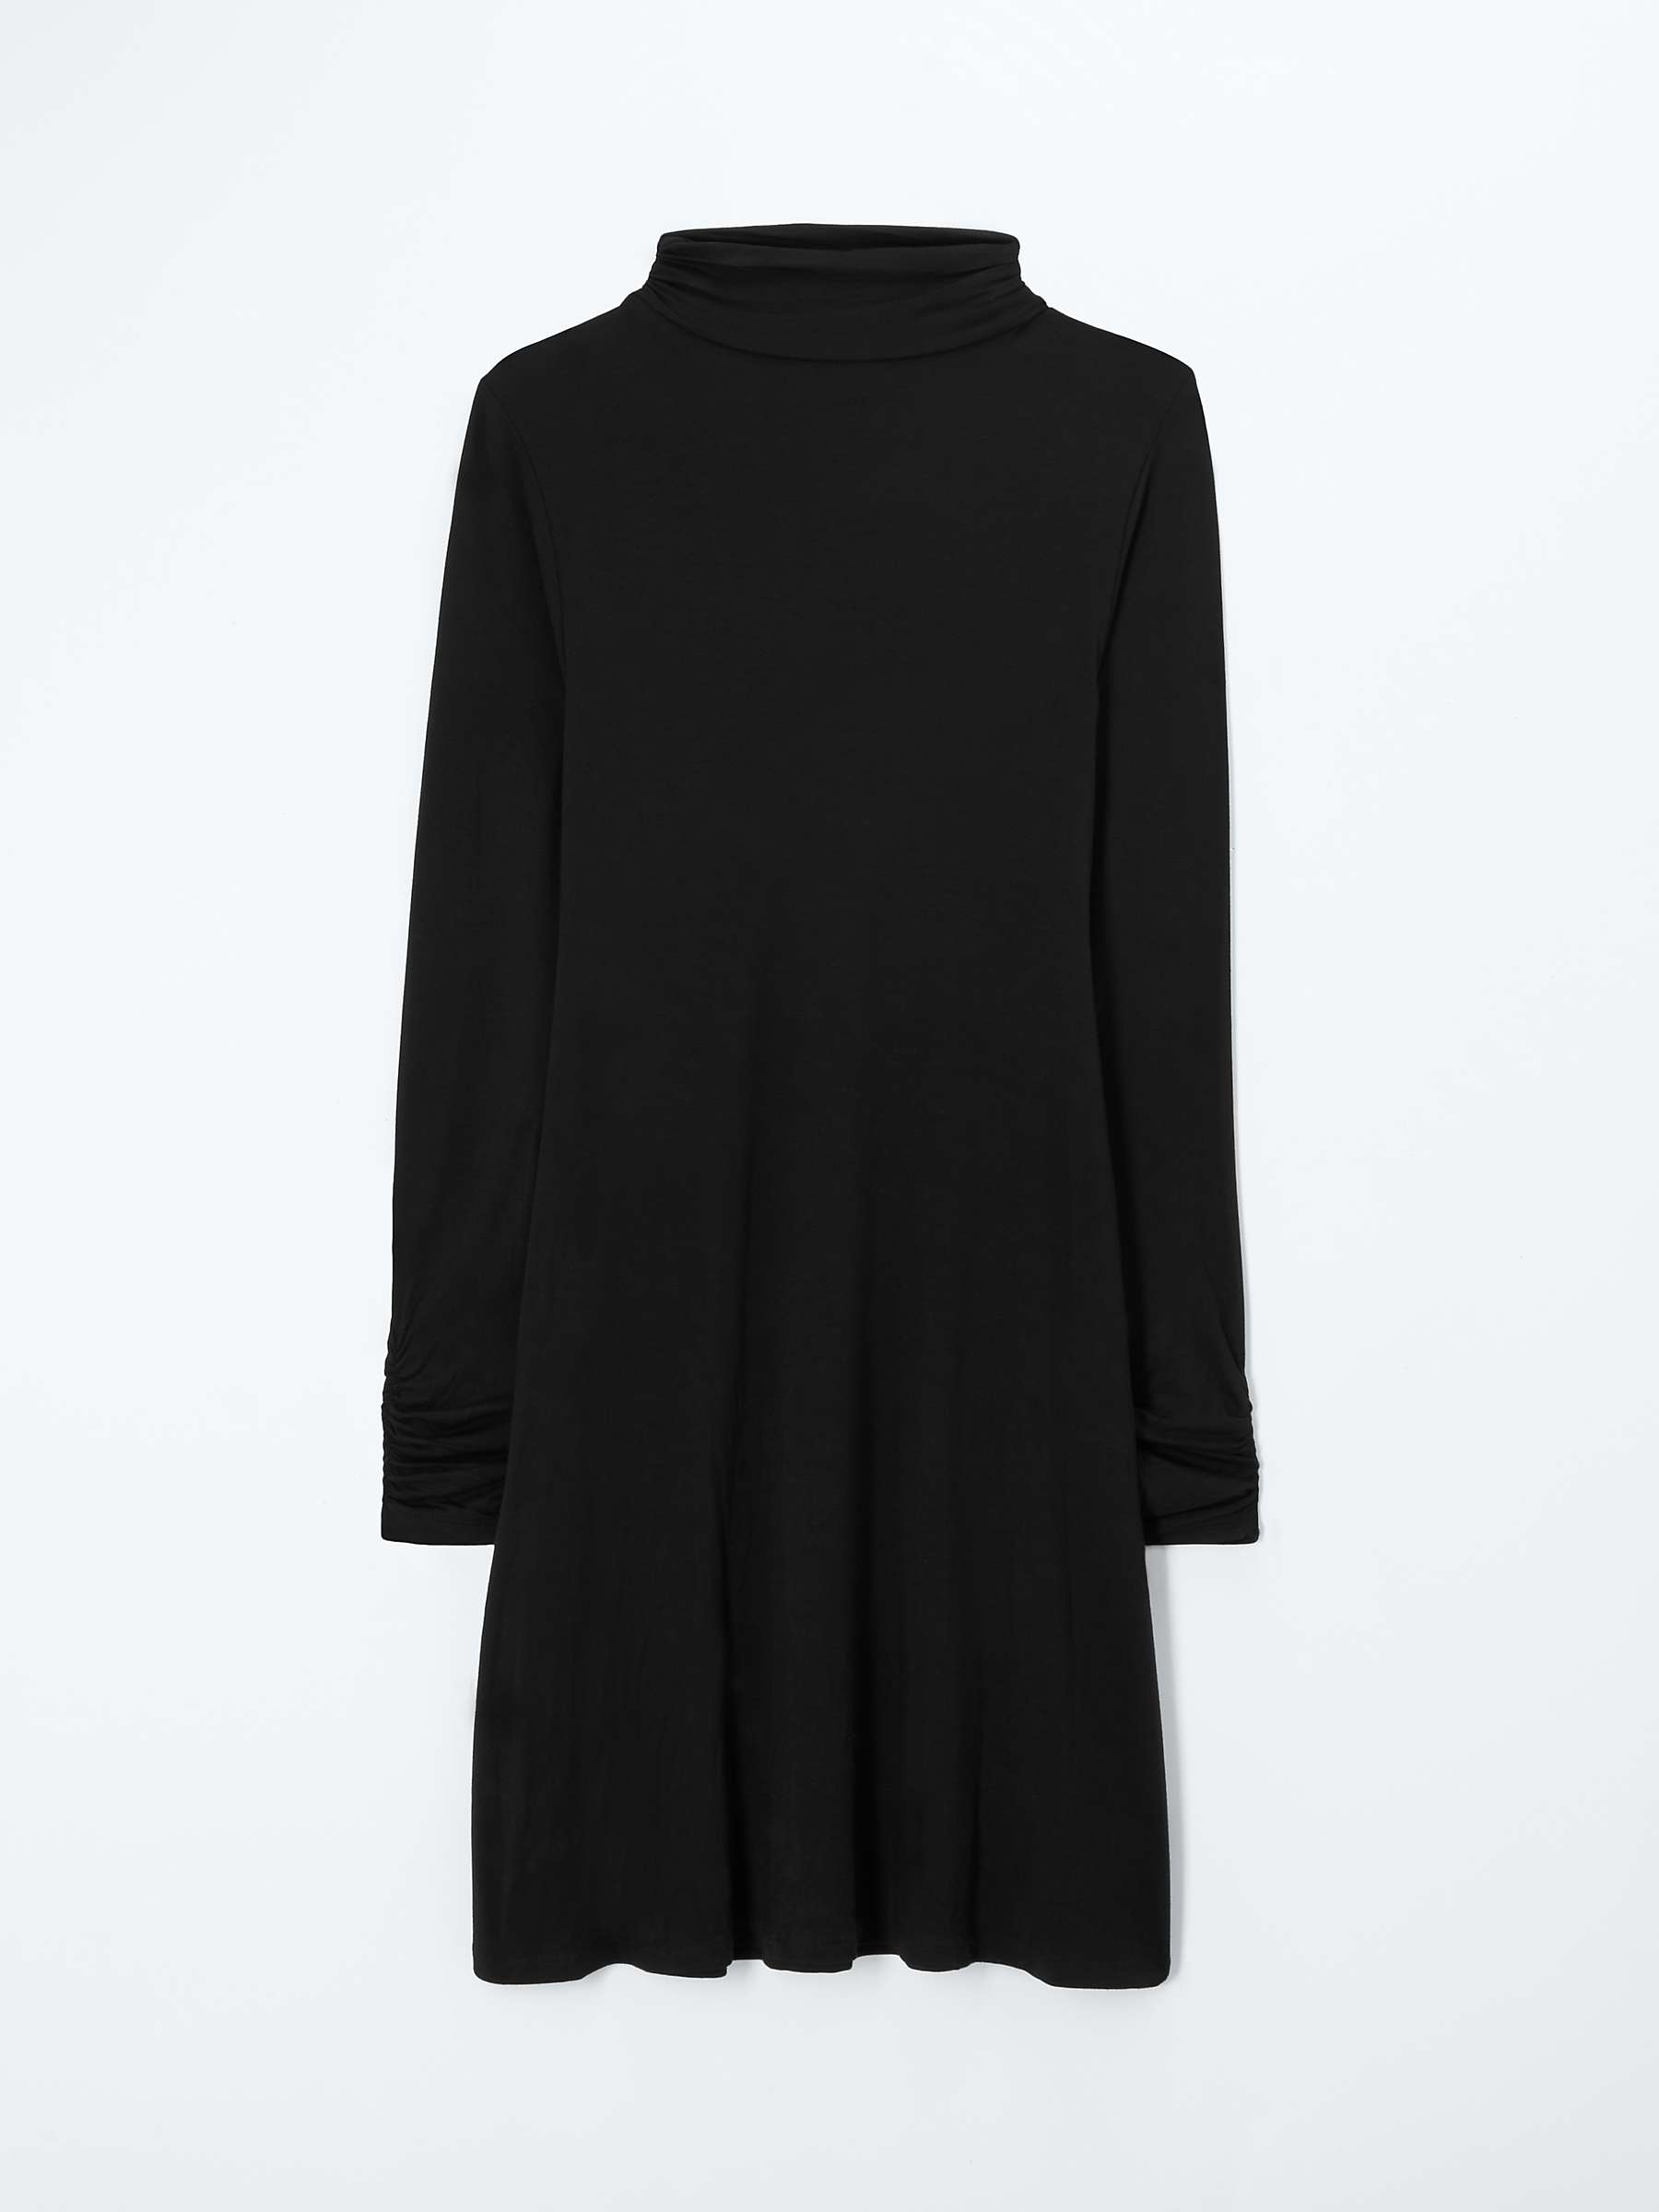 Buy John Lewis ANYDAY Fit & Flare Jersey Dress, Black Online at johnlewis.com